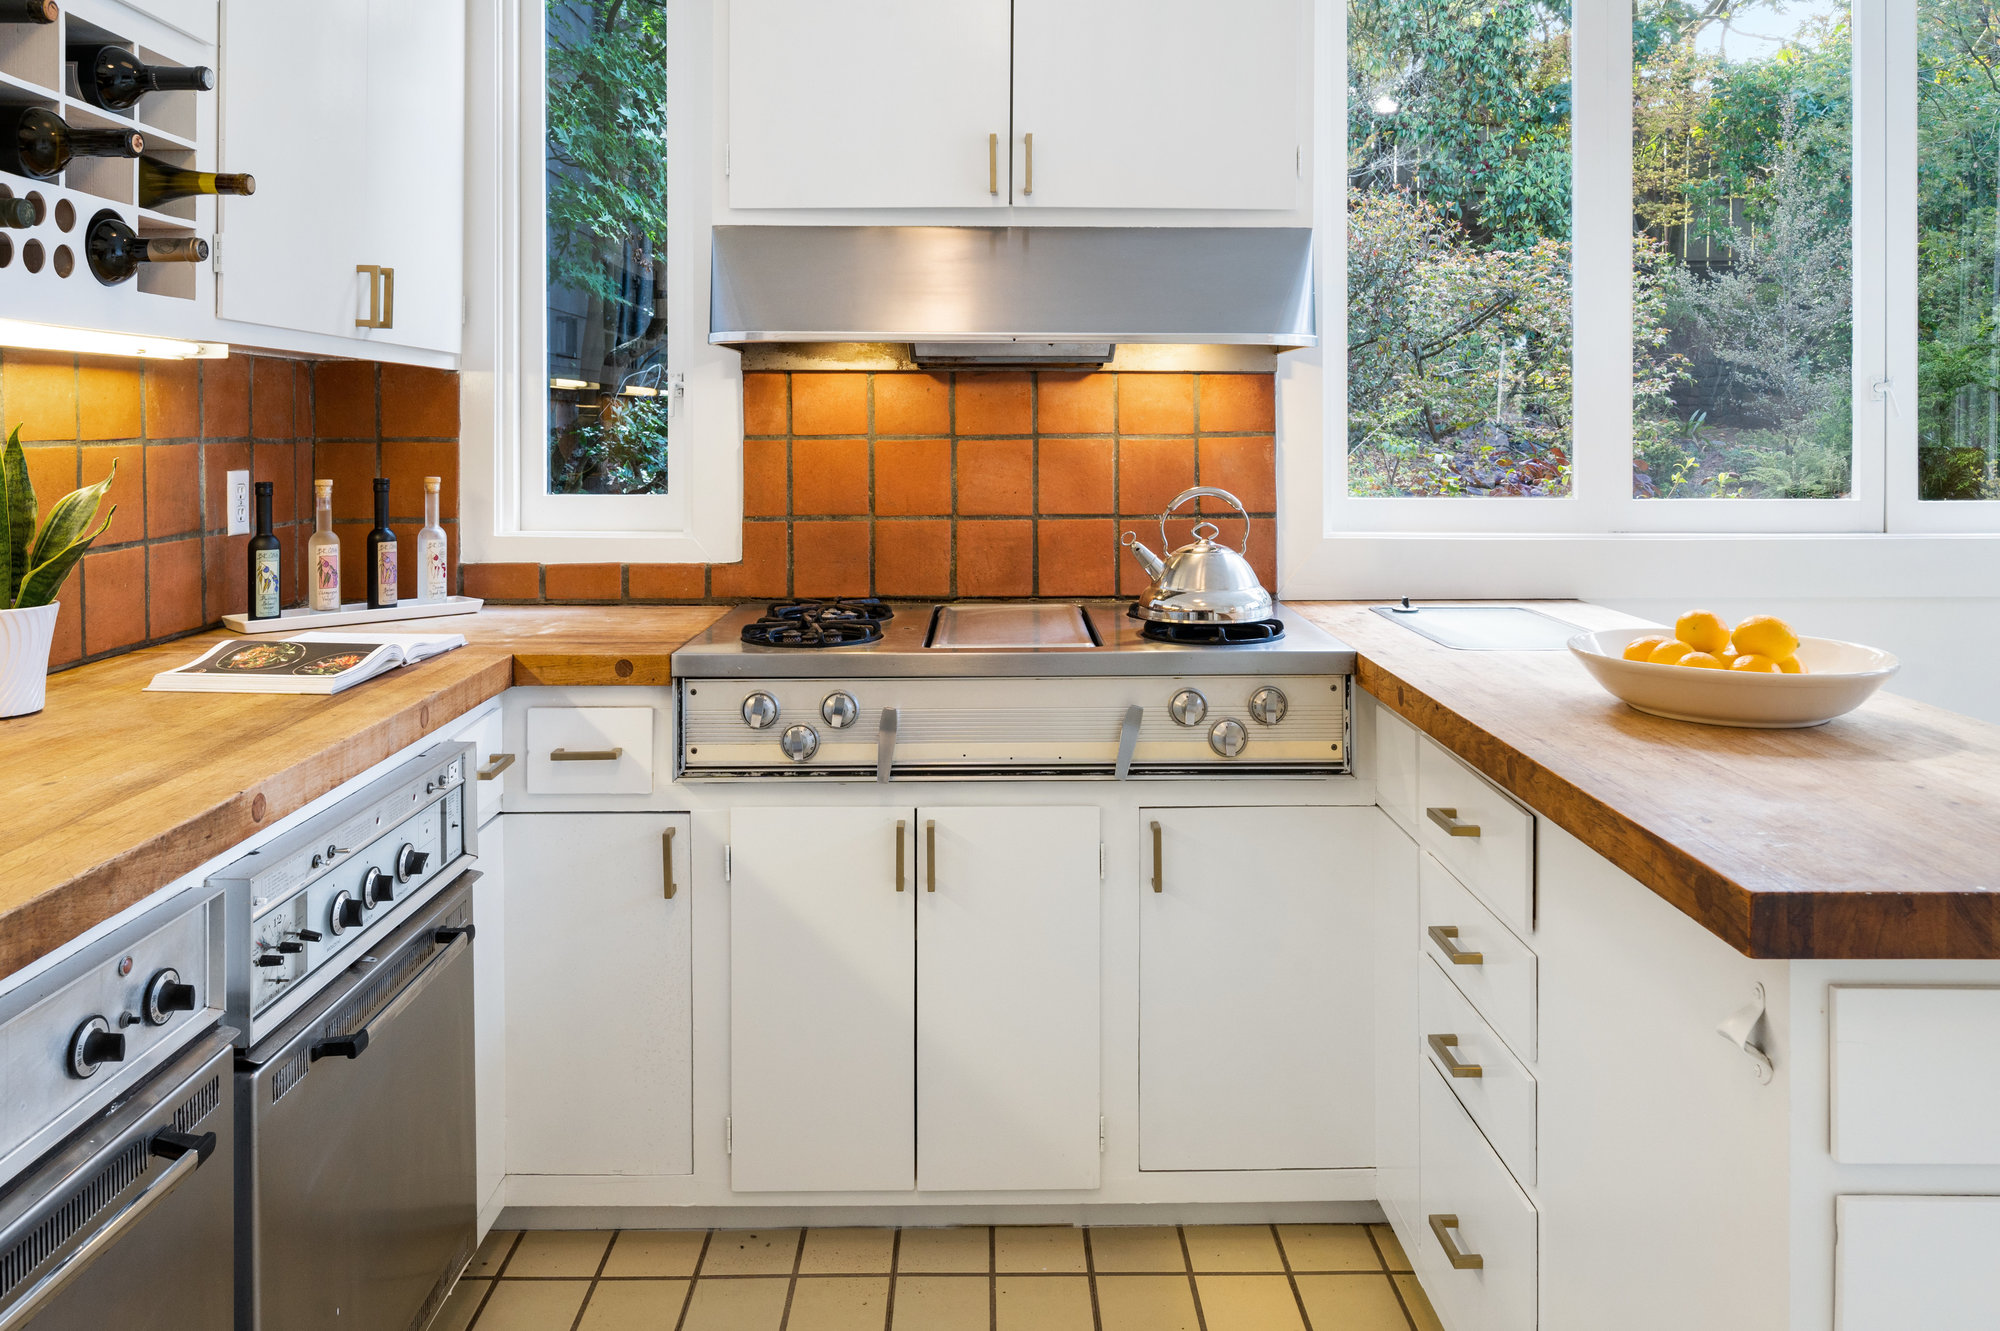 Property Photo: Kitchen showing terracotta tiled backsplash and plenty of natural light